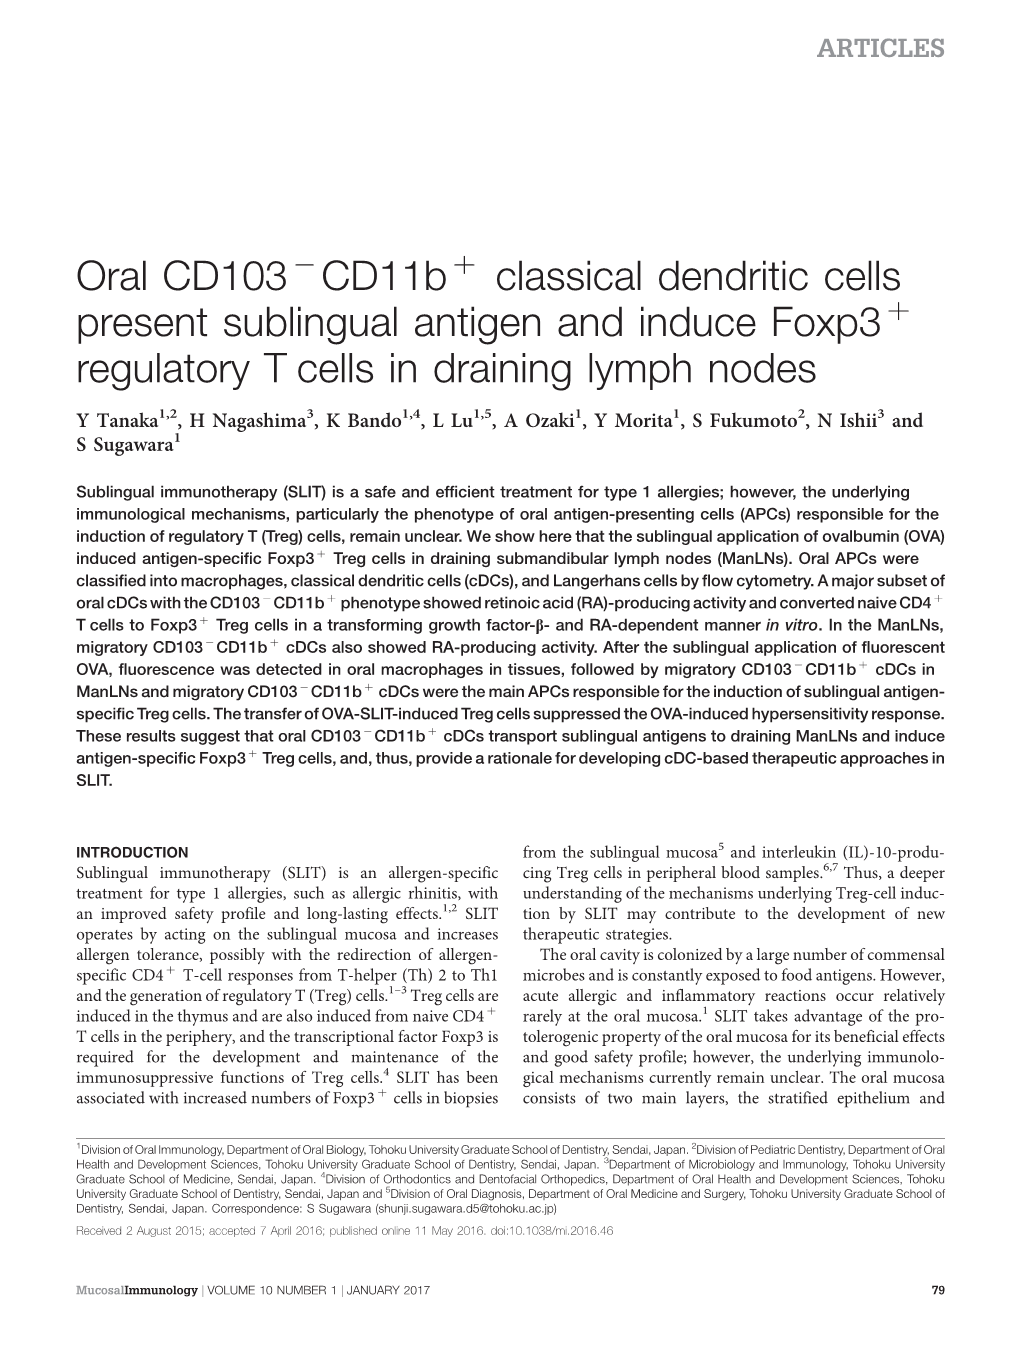 Classical Dendritic Cells Present Sublingual Antigen and Induce Foxp3 Þ Regulatory T Cells in Draining Lymph Nodes